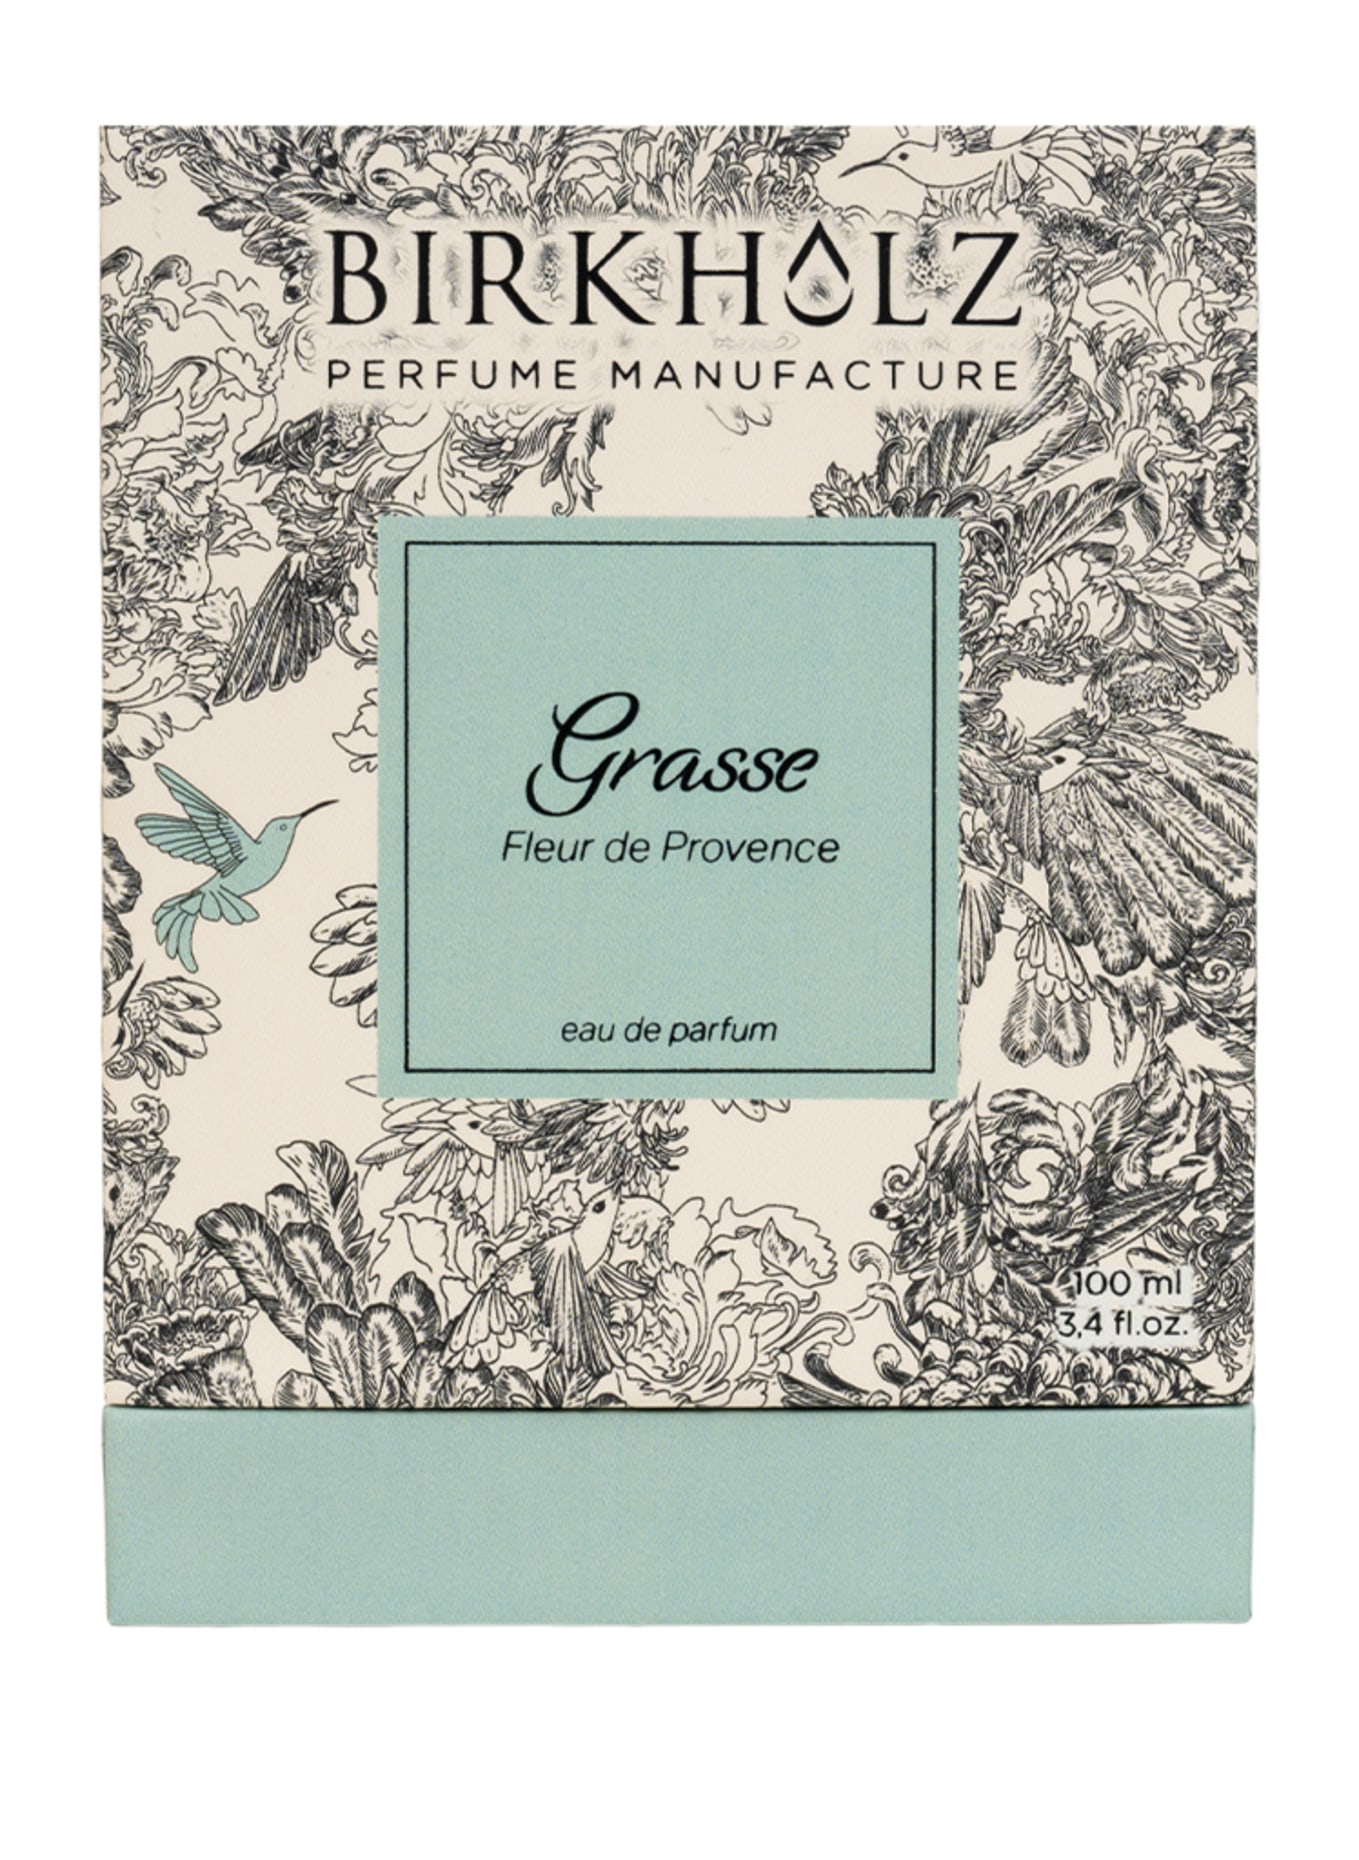 BIRKHOLZ GRASSE - FLEUR DE PROVENCE (Bild 2)